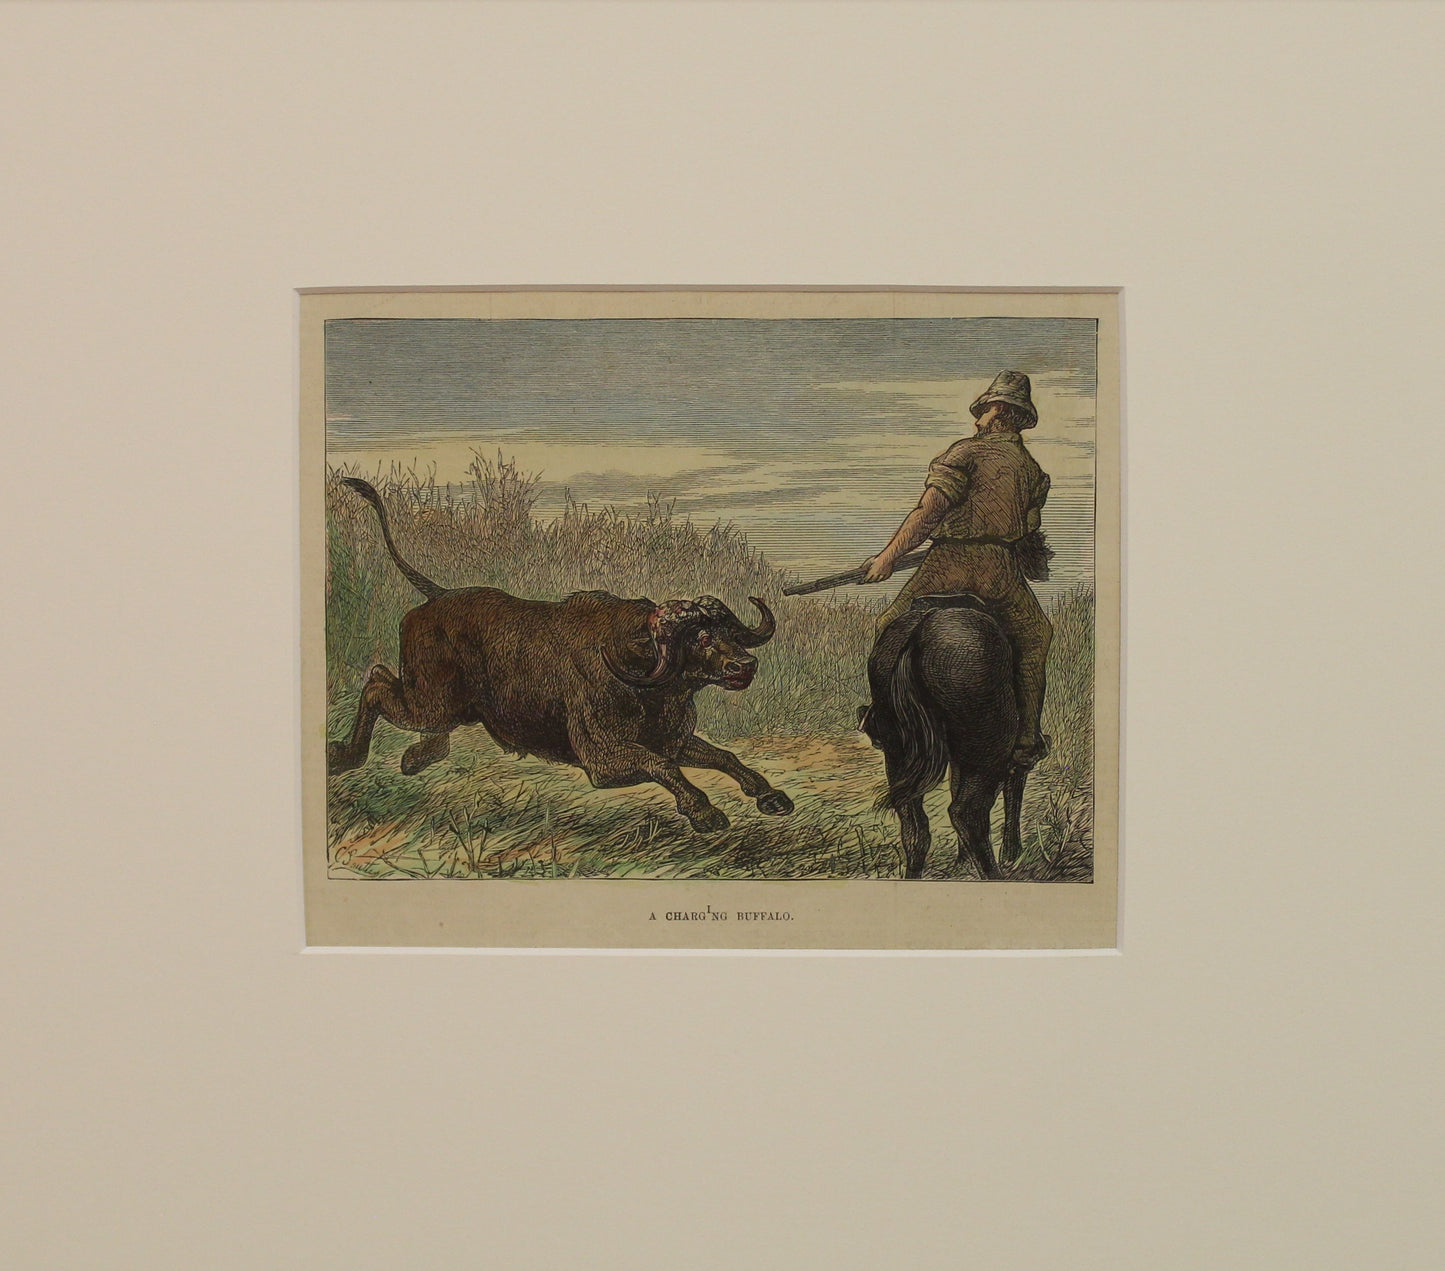 Australia, A Charging Buffalo, The London Illustrated News, c1898